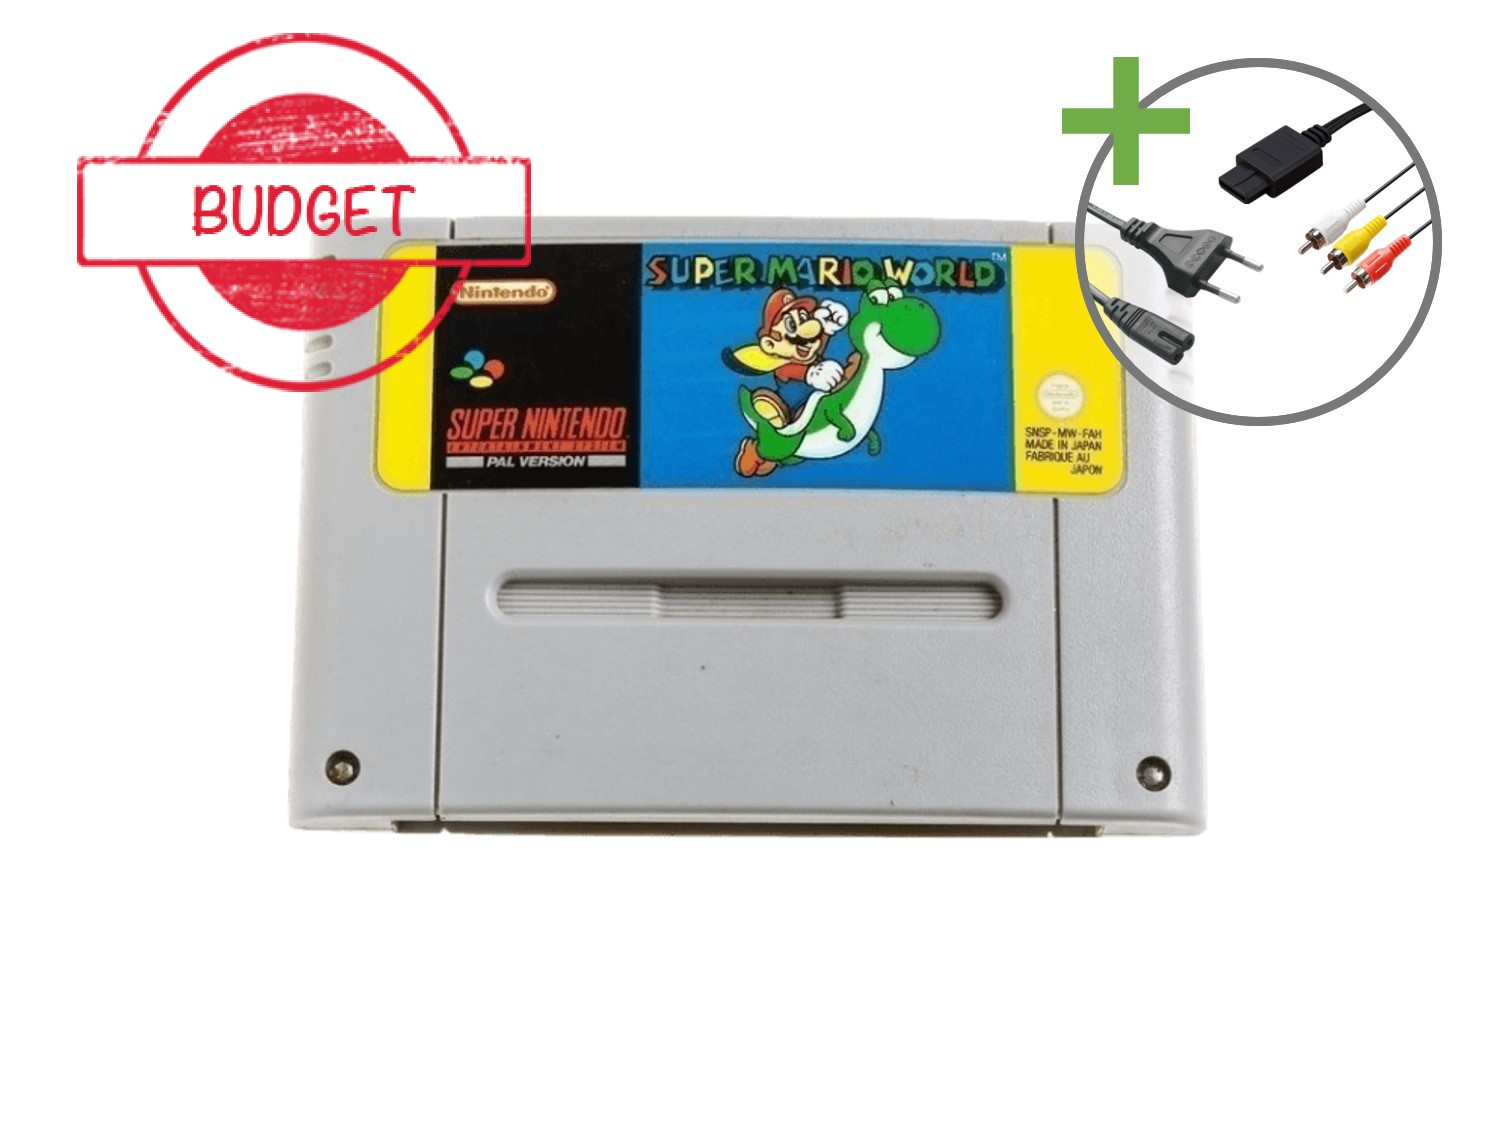 Super Nintendo Starter Pack - Super Mario World Edition - Budget - Super Nintendo Hardware - 3